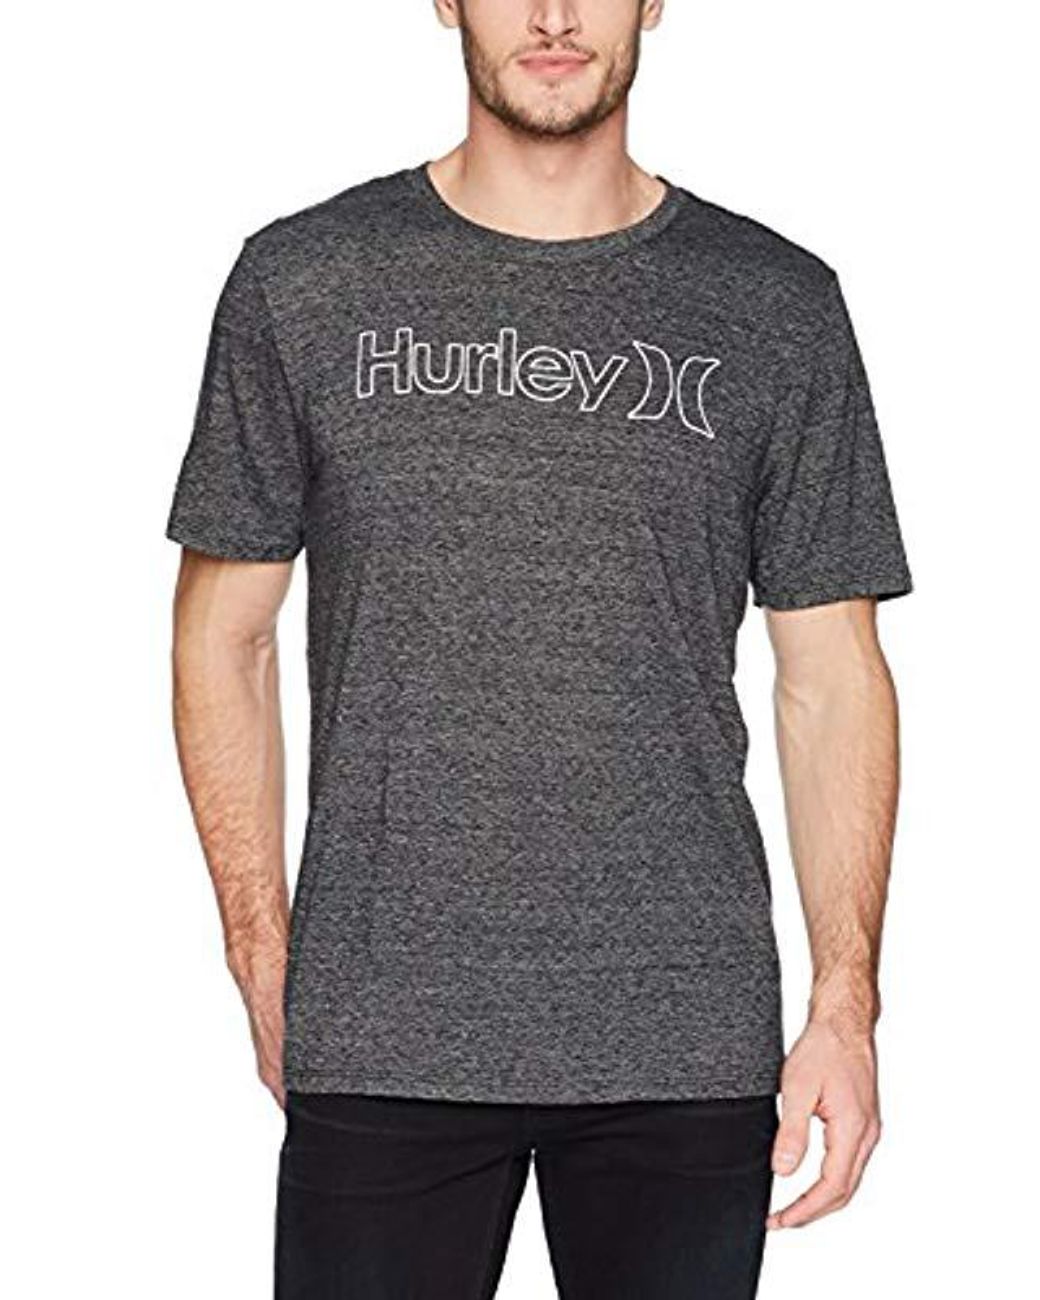 Lyst - Hurley Tri-blend Premium Short Sleeve Tshirt in Gray for Men